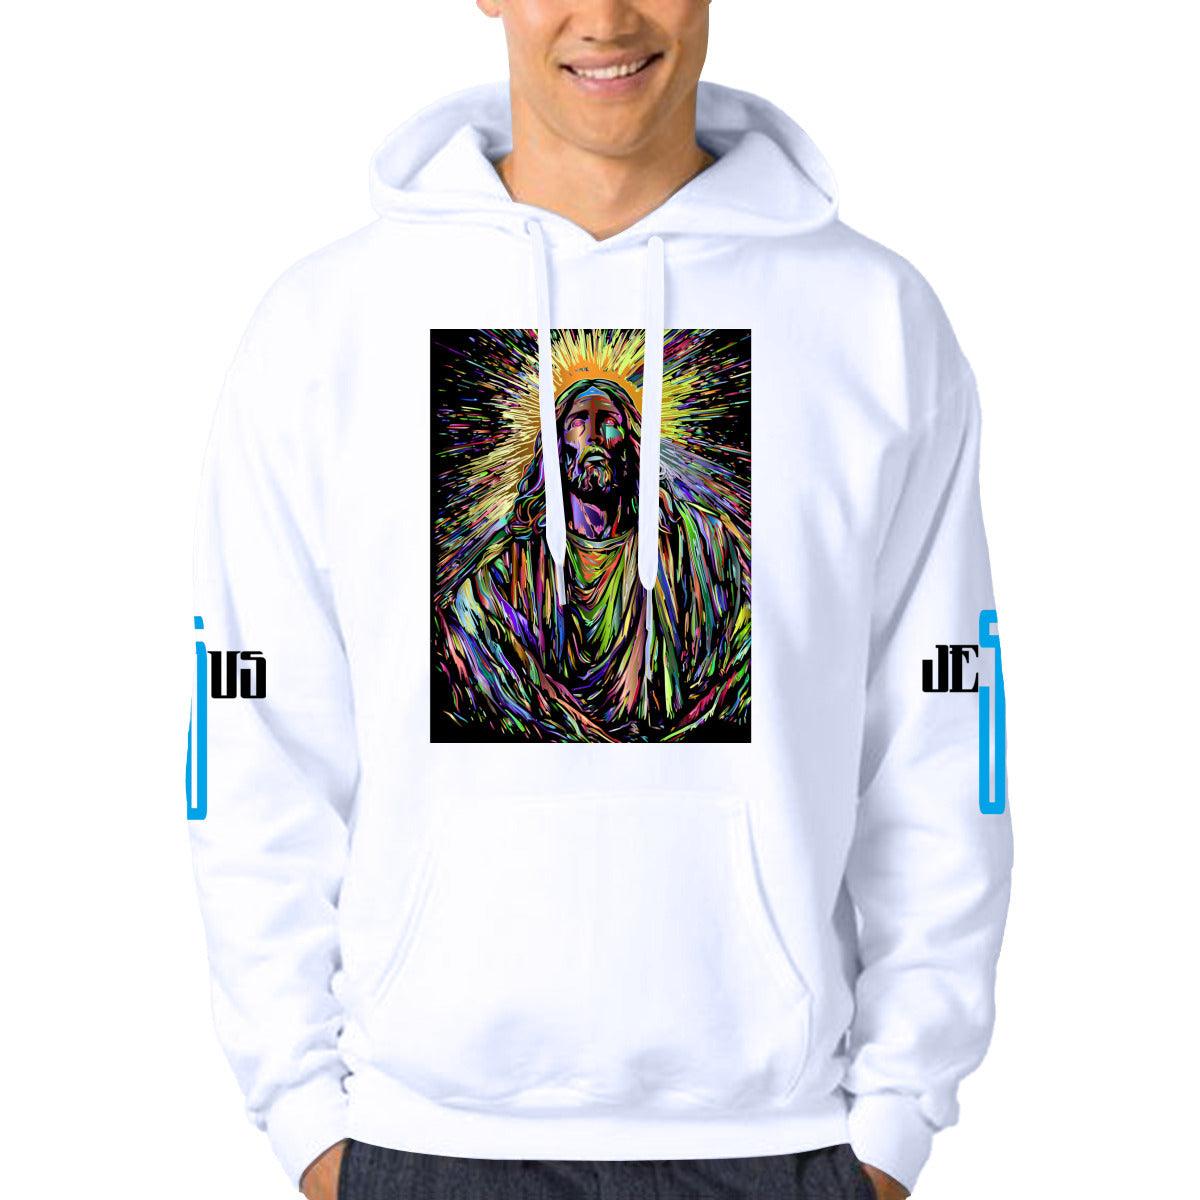 Jesus-Christ-Loves you hoodies T-Shirts & hoodies